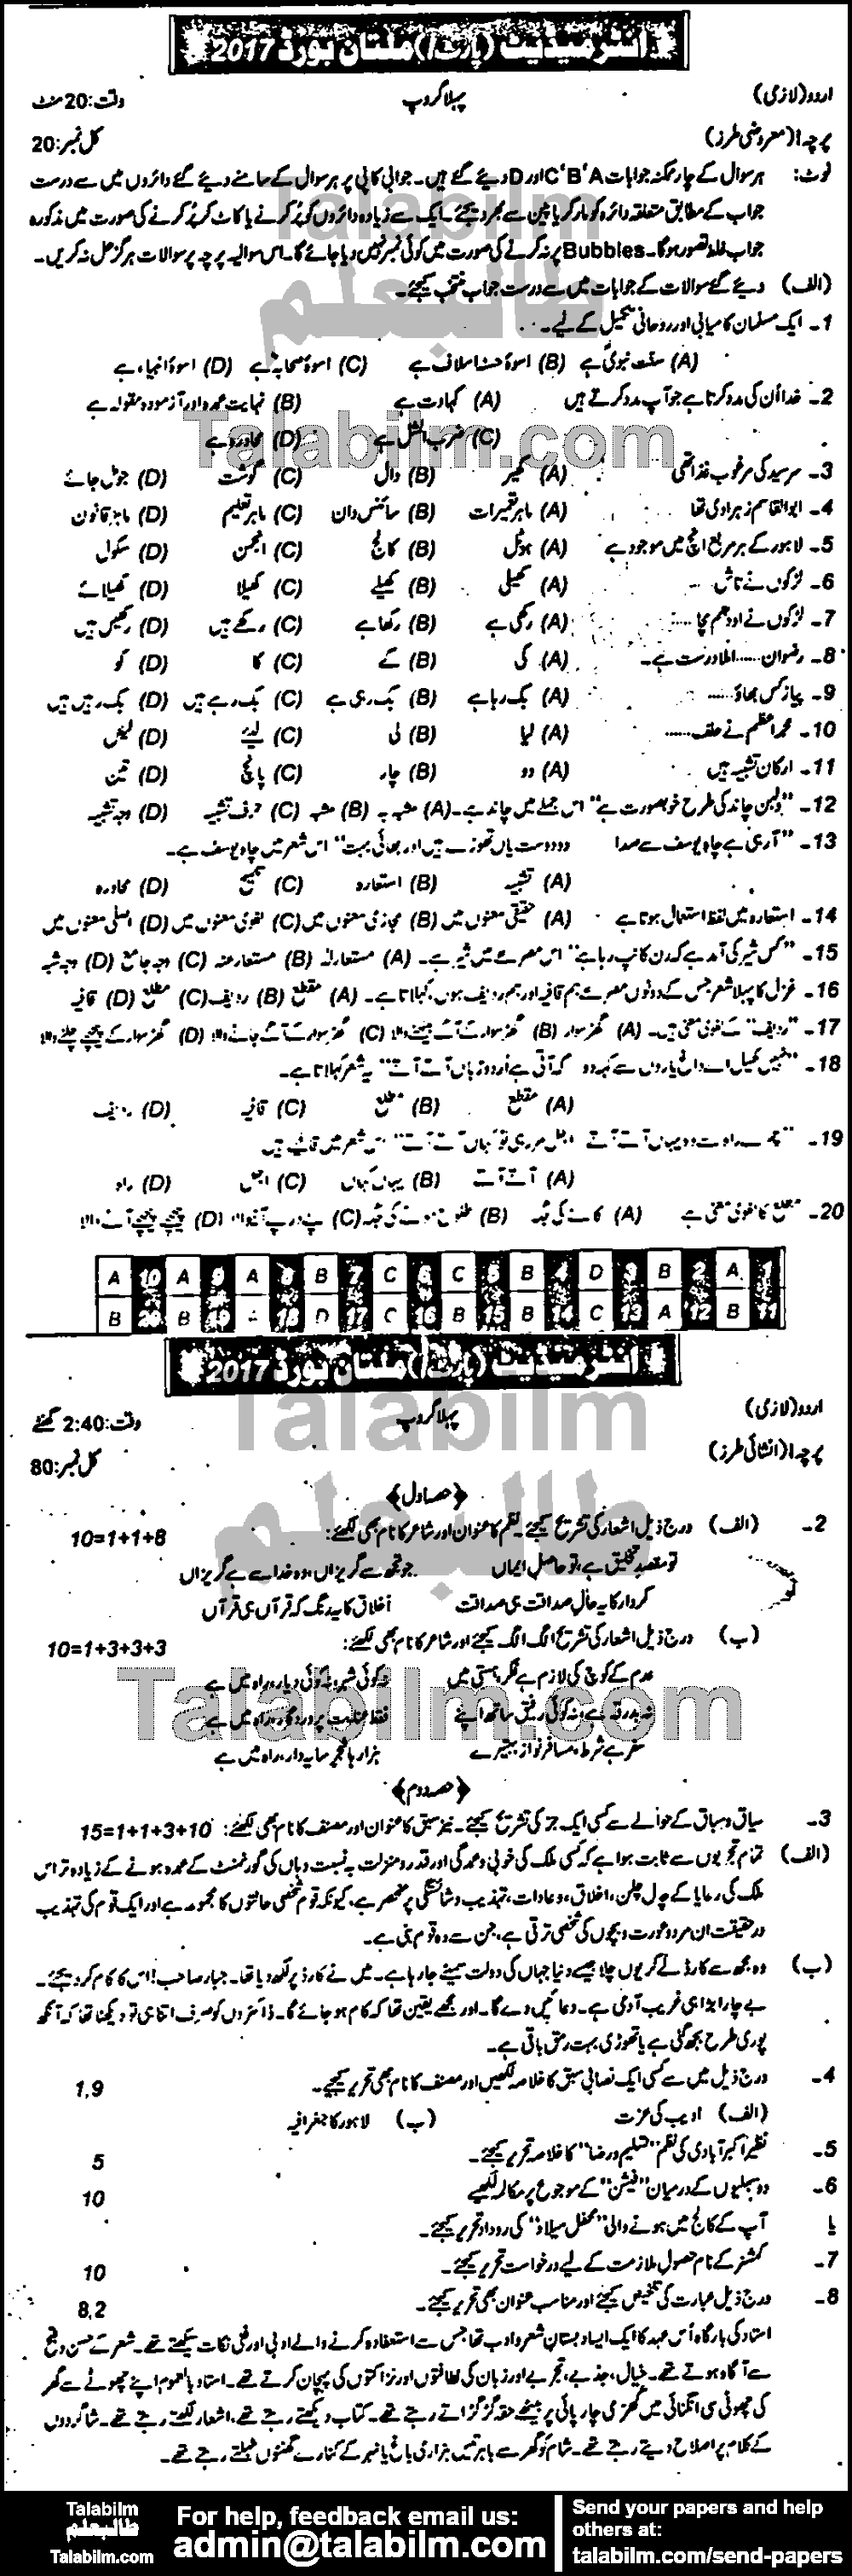 Urdu 0 past paper for Group-I 2017